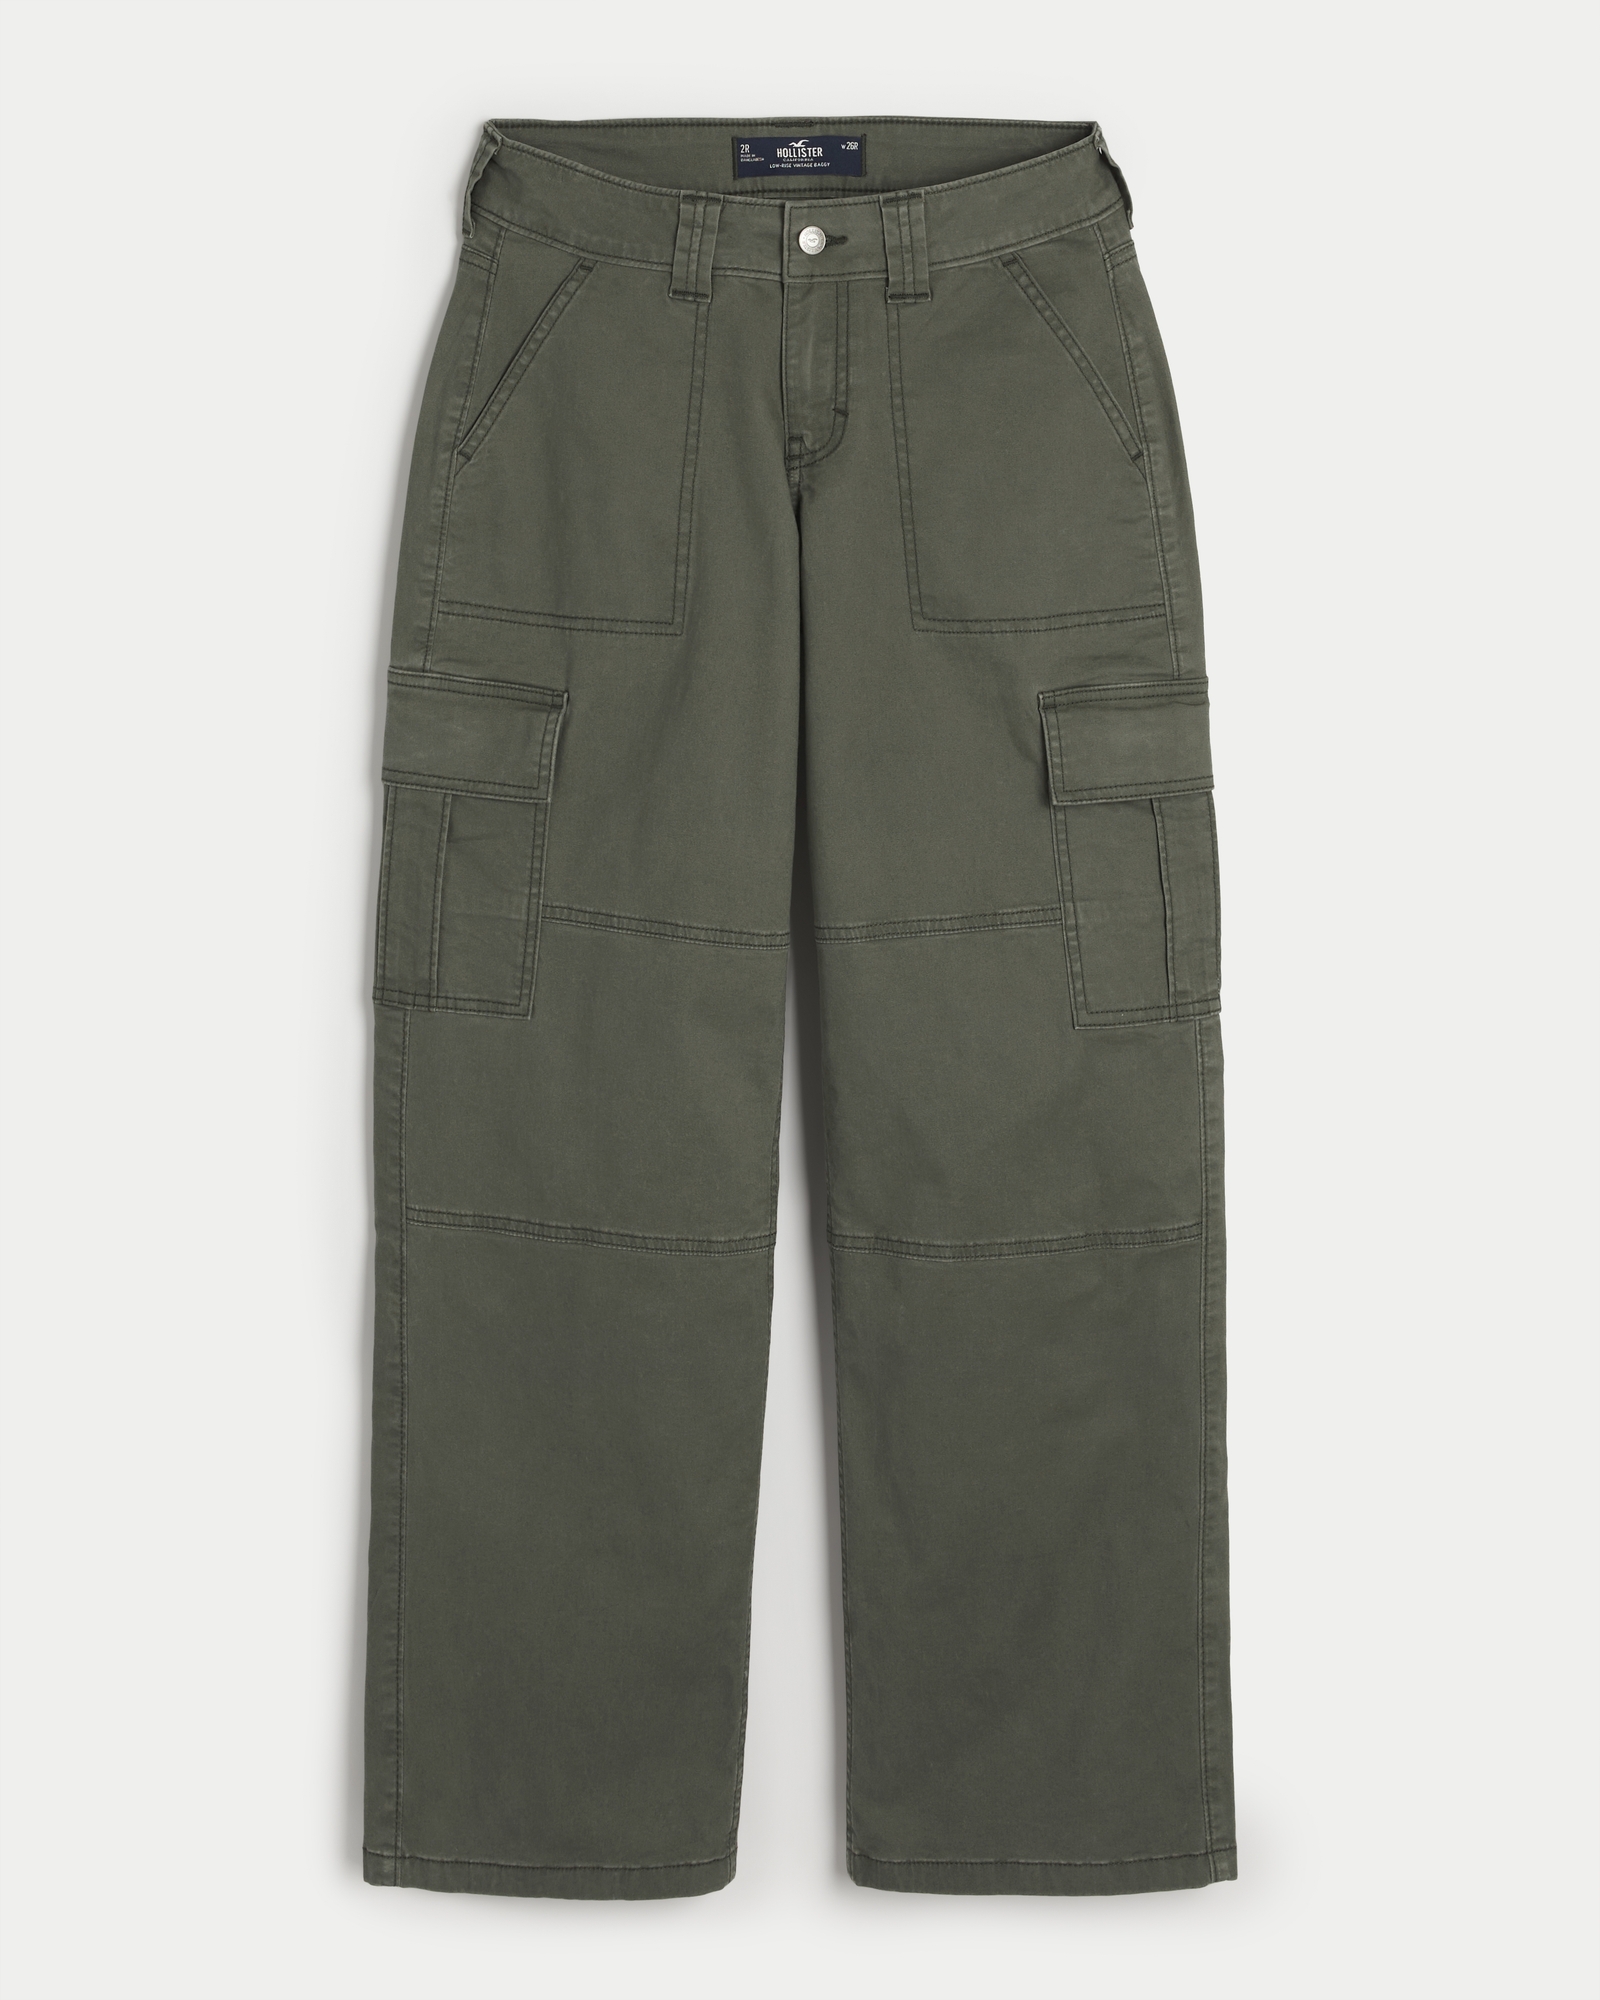 Hollister Co. Men's Cargo Trousers, Combats, Cargo Pants